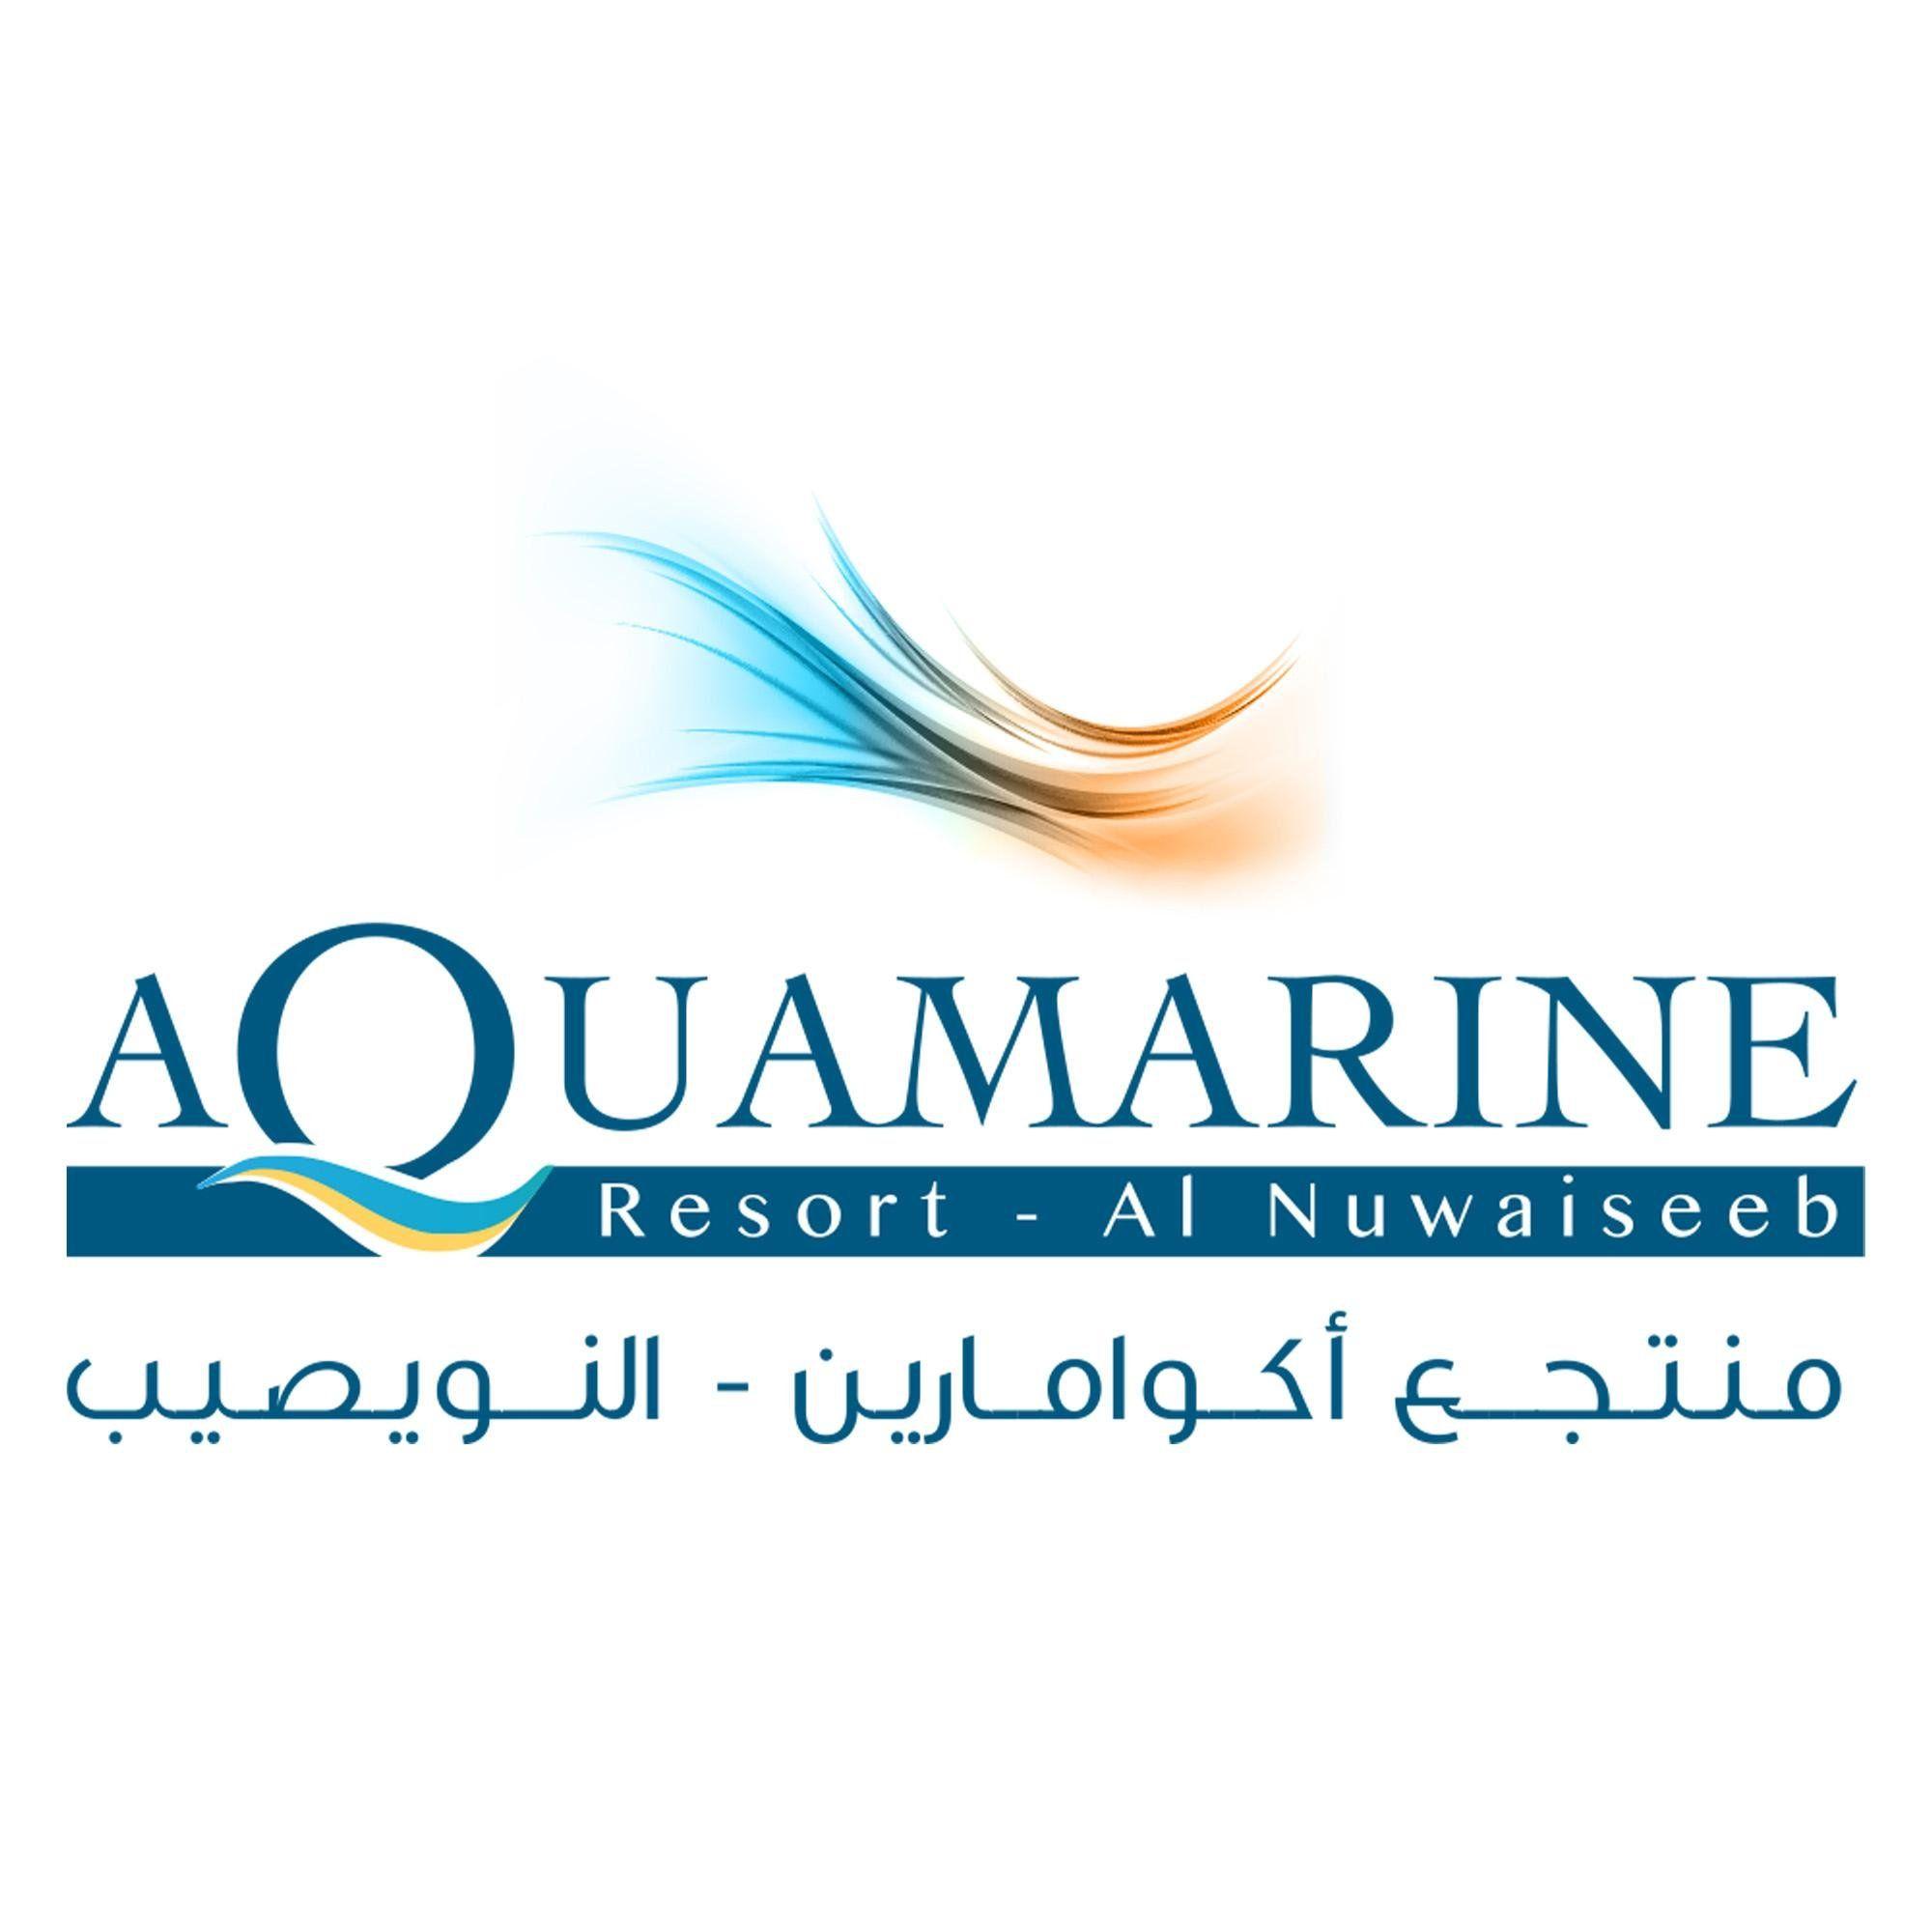 Aquamarine Logo - Aquamarine Resorts